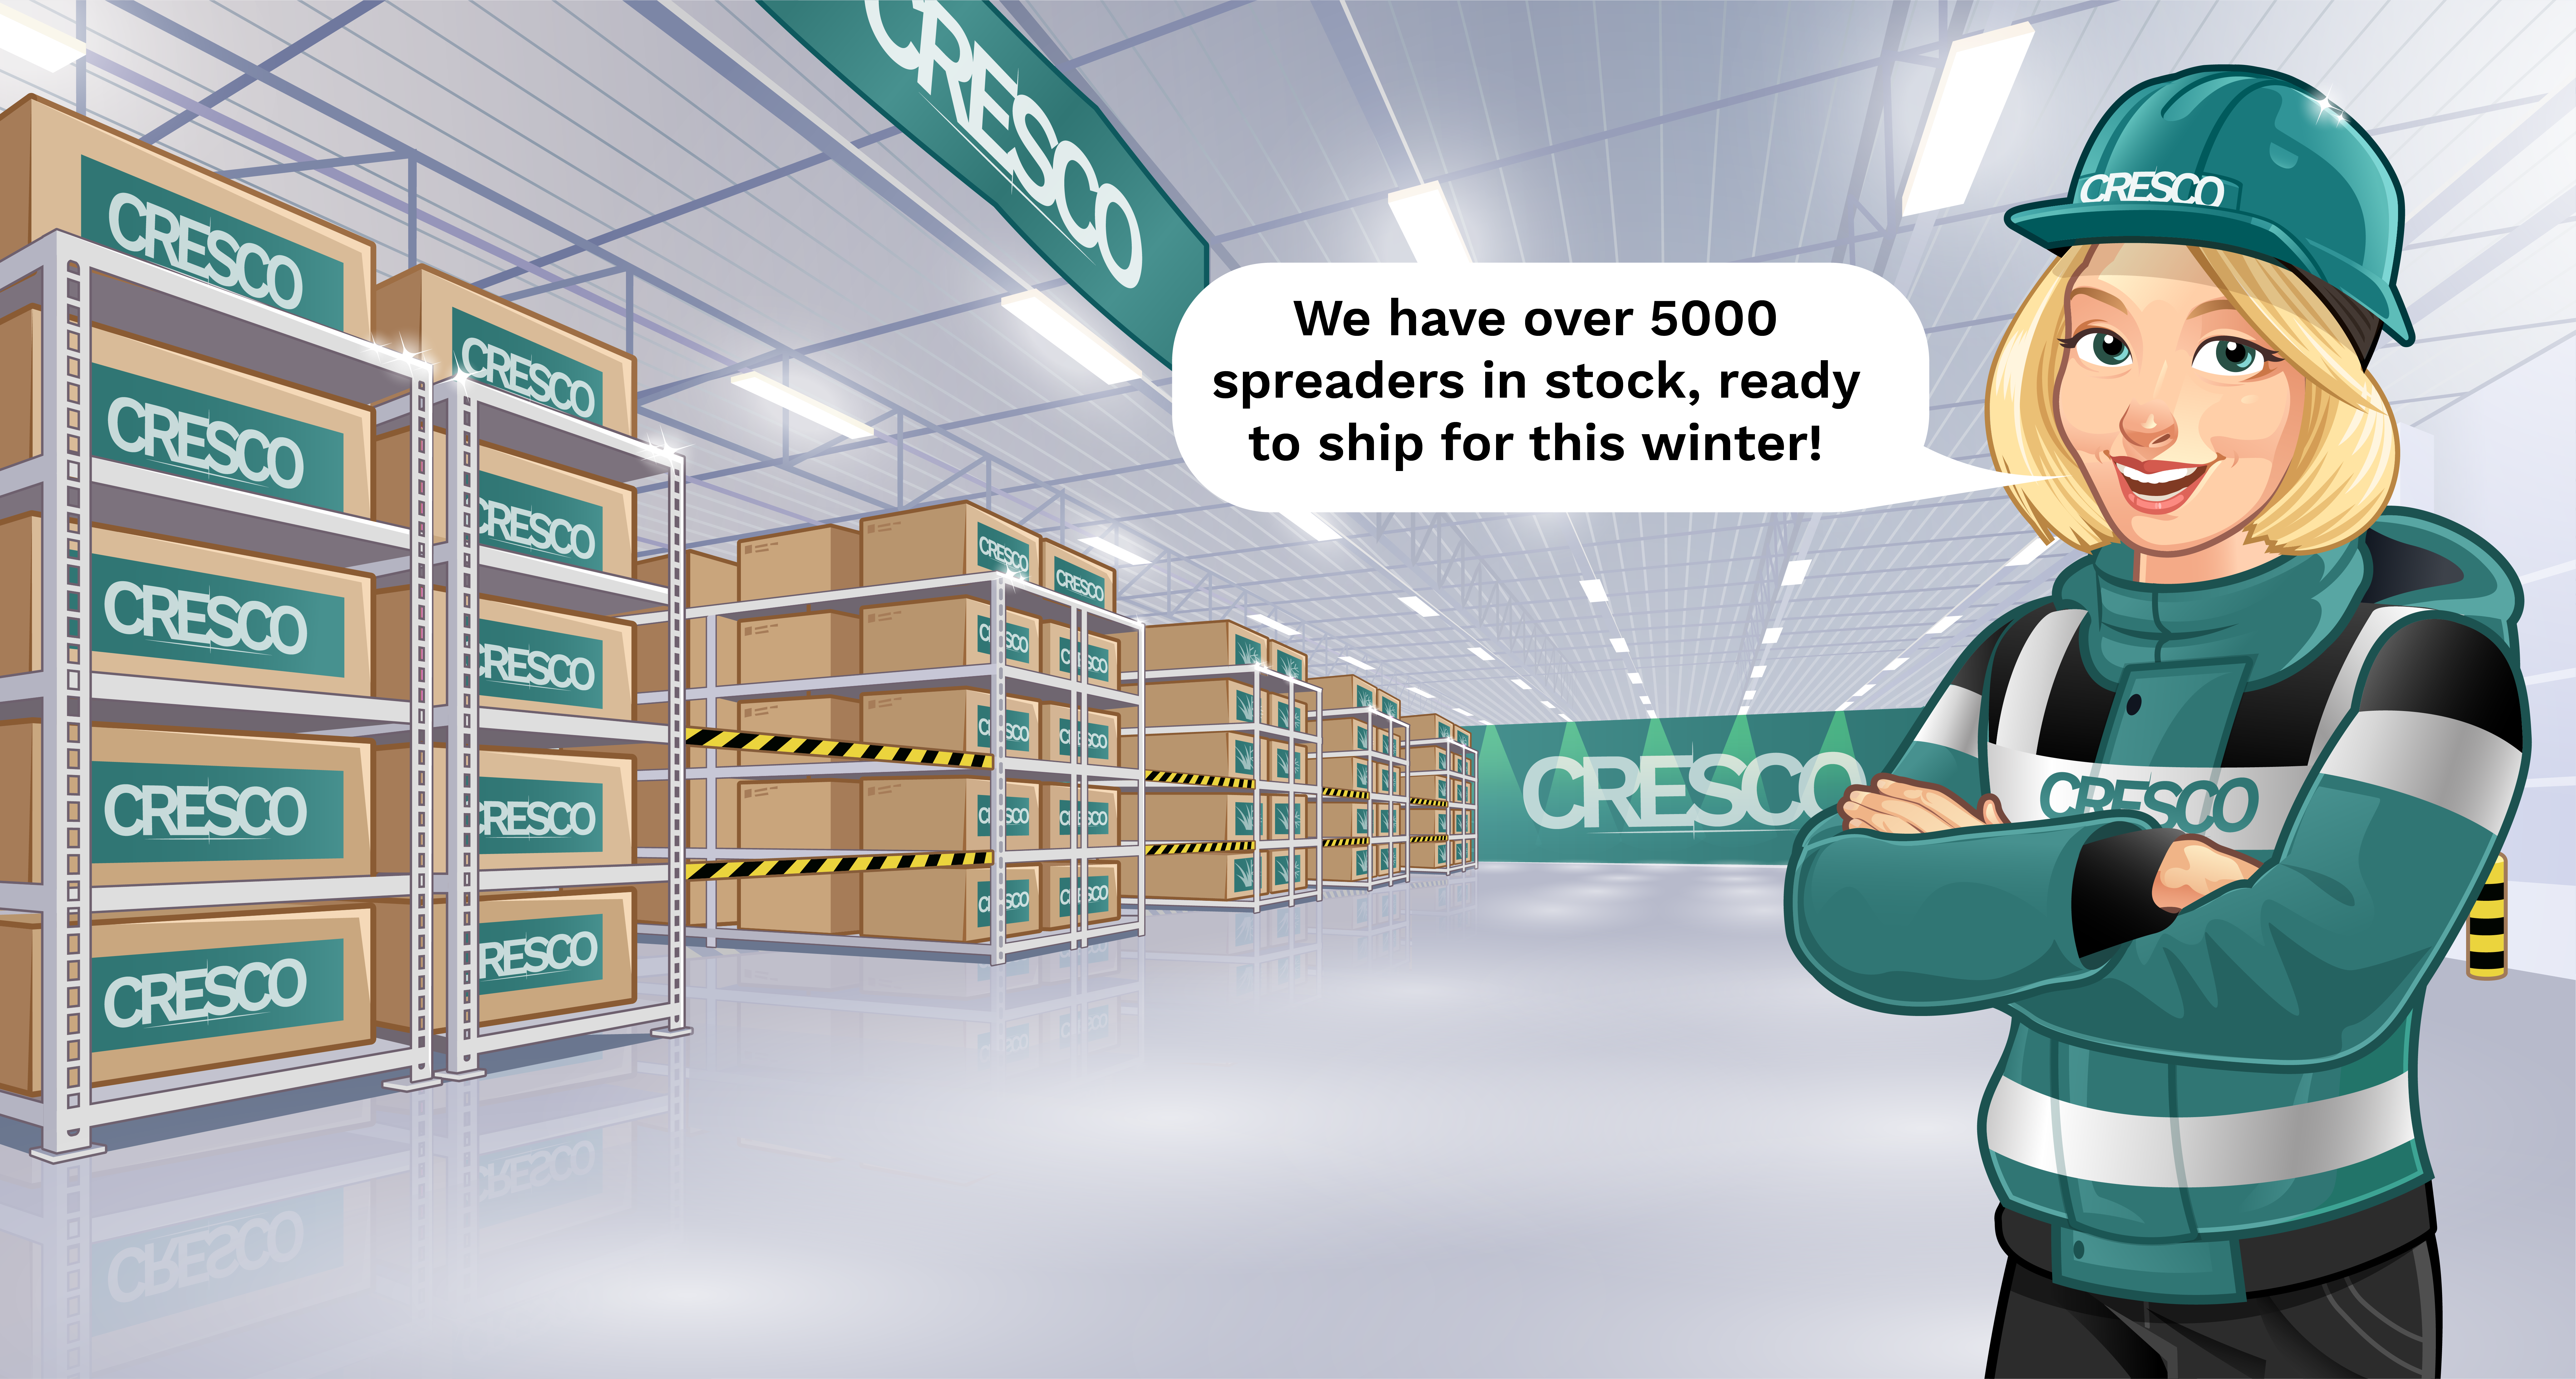 Cresco Warehouse 5000 Spreaders in stock this winter